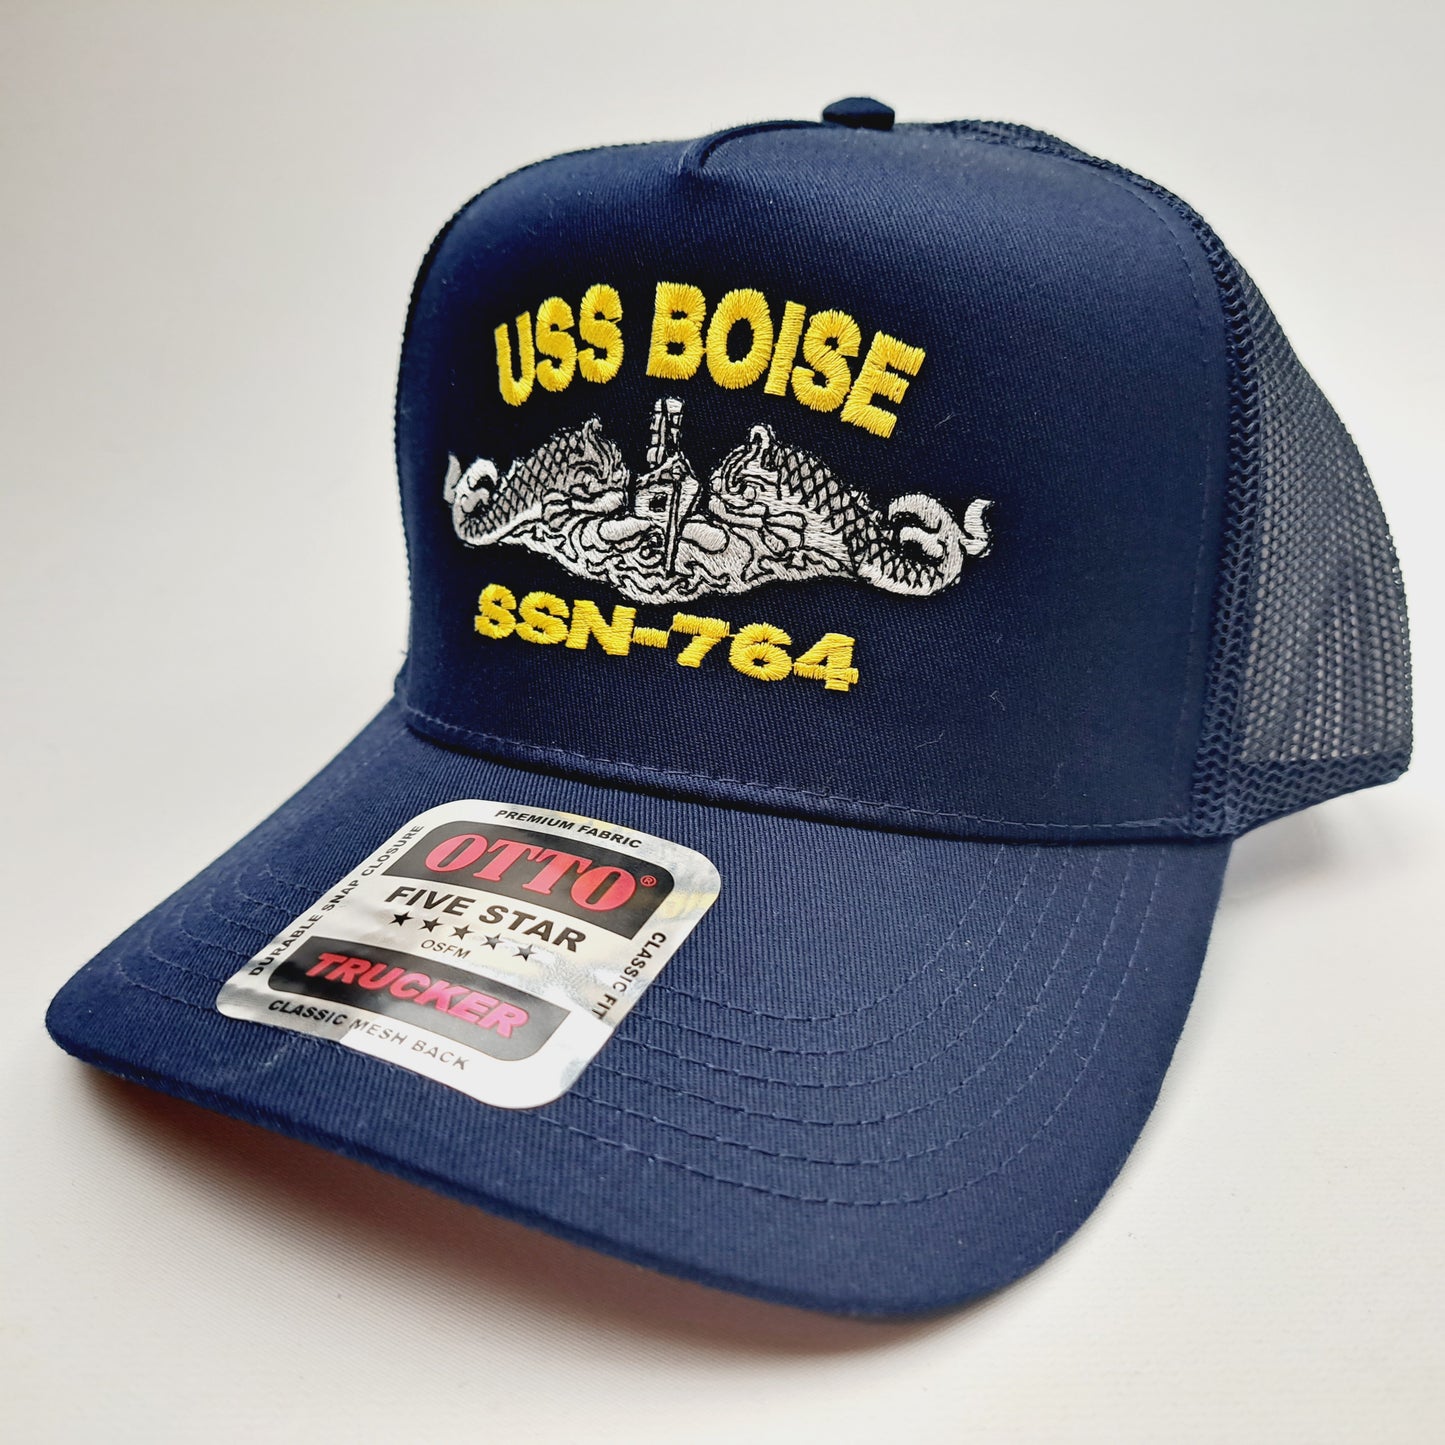 USS Boise SSN-764 Boat Baseball Cap Hat Mesh Snapback Blue US Navy